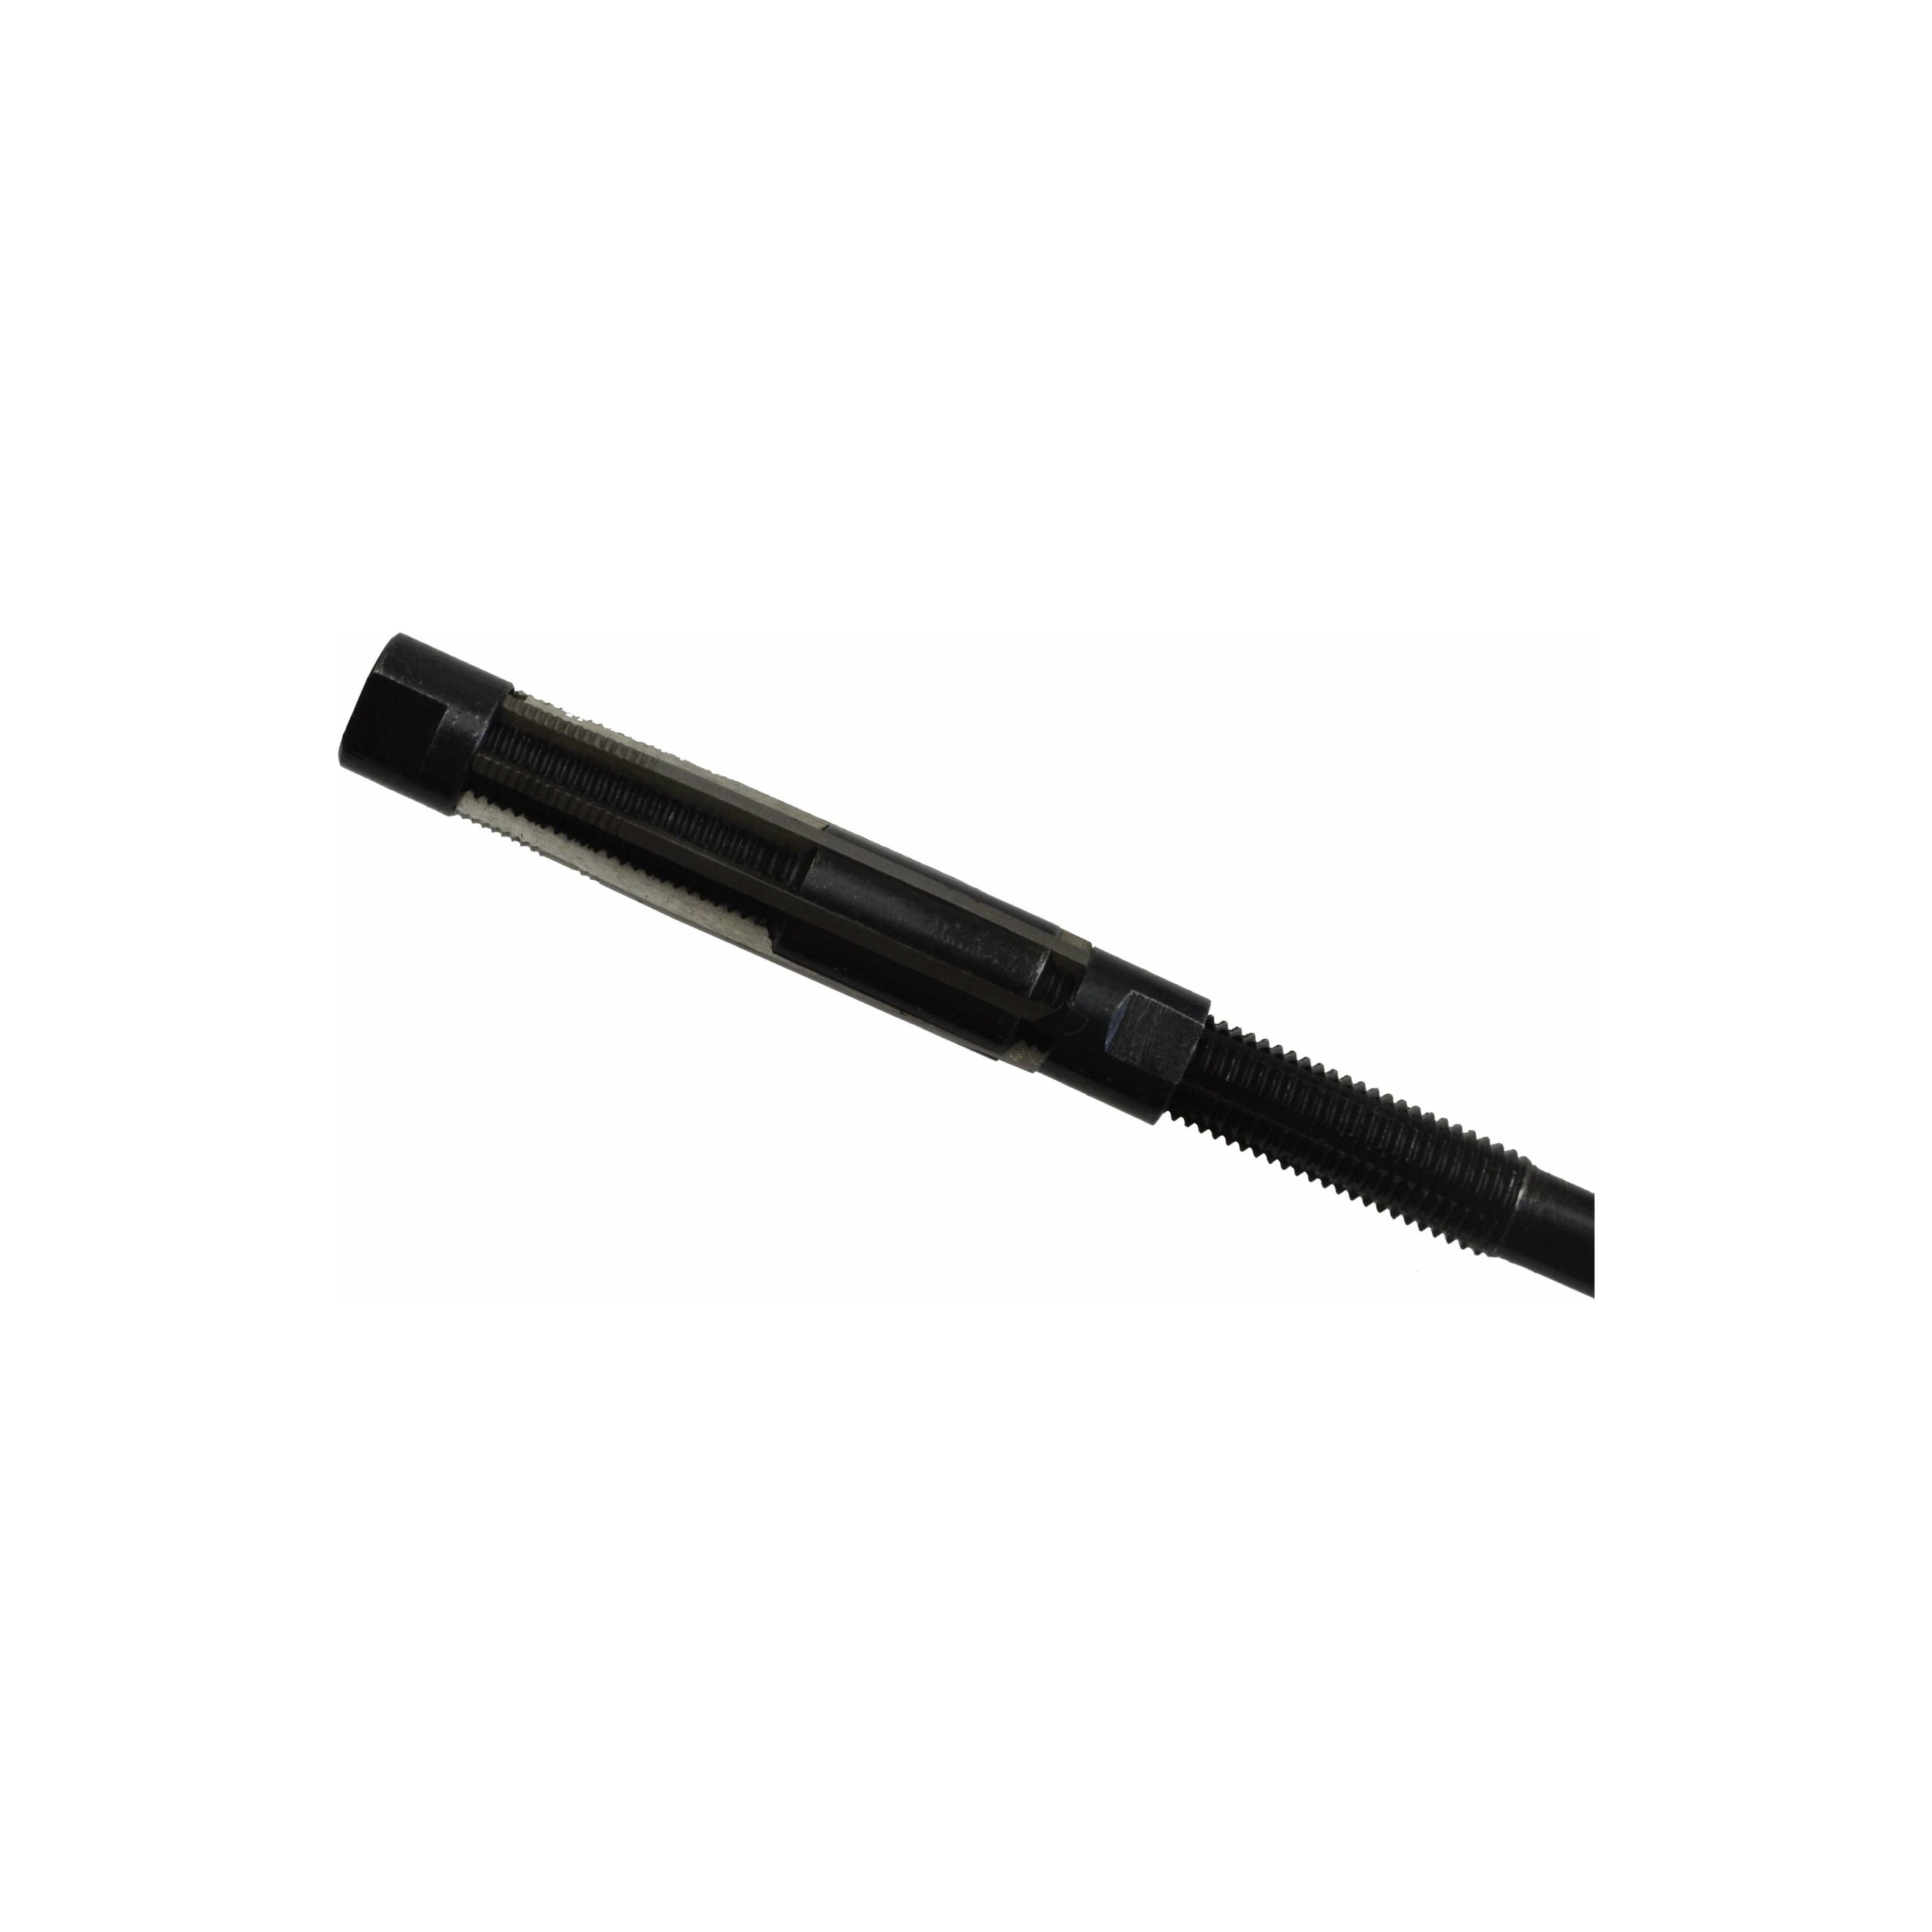 11 - 12 mm HSS Blade No Guide Adjustable Hand Reamer